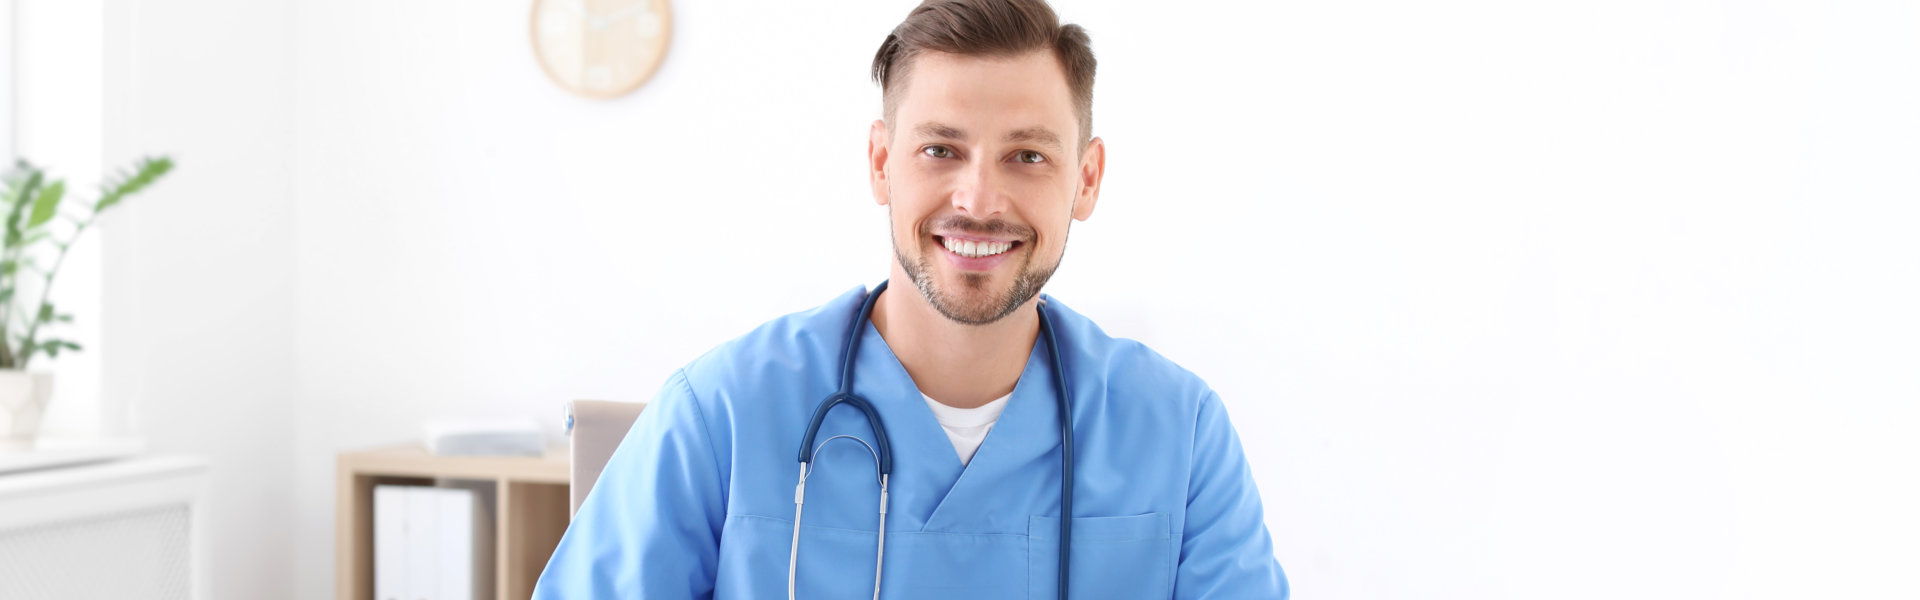 nurse with stethoscope smiling